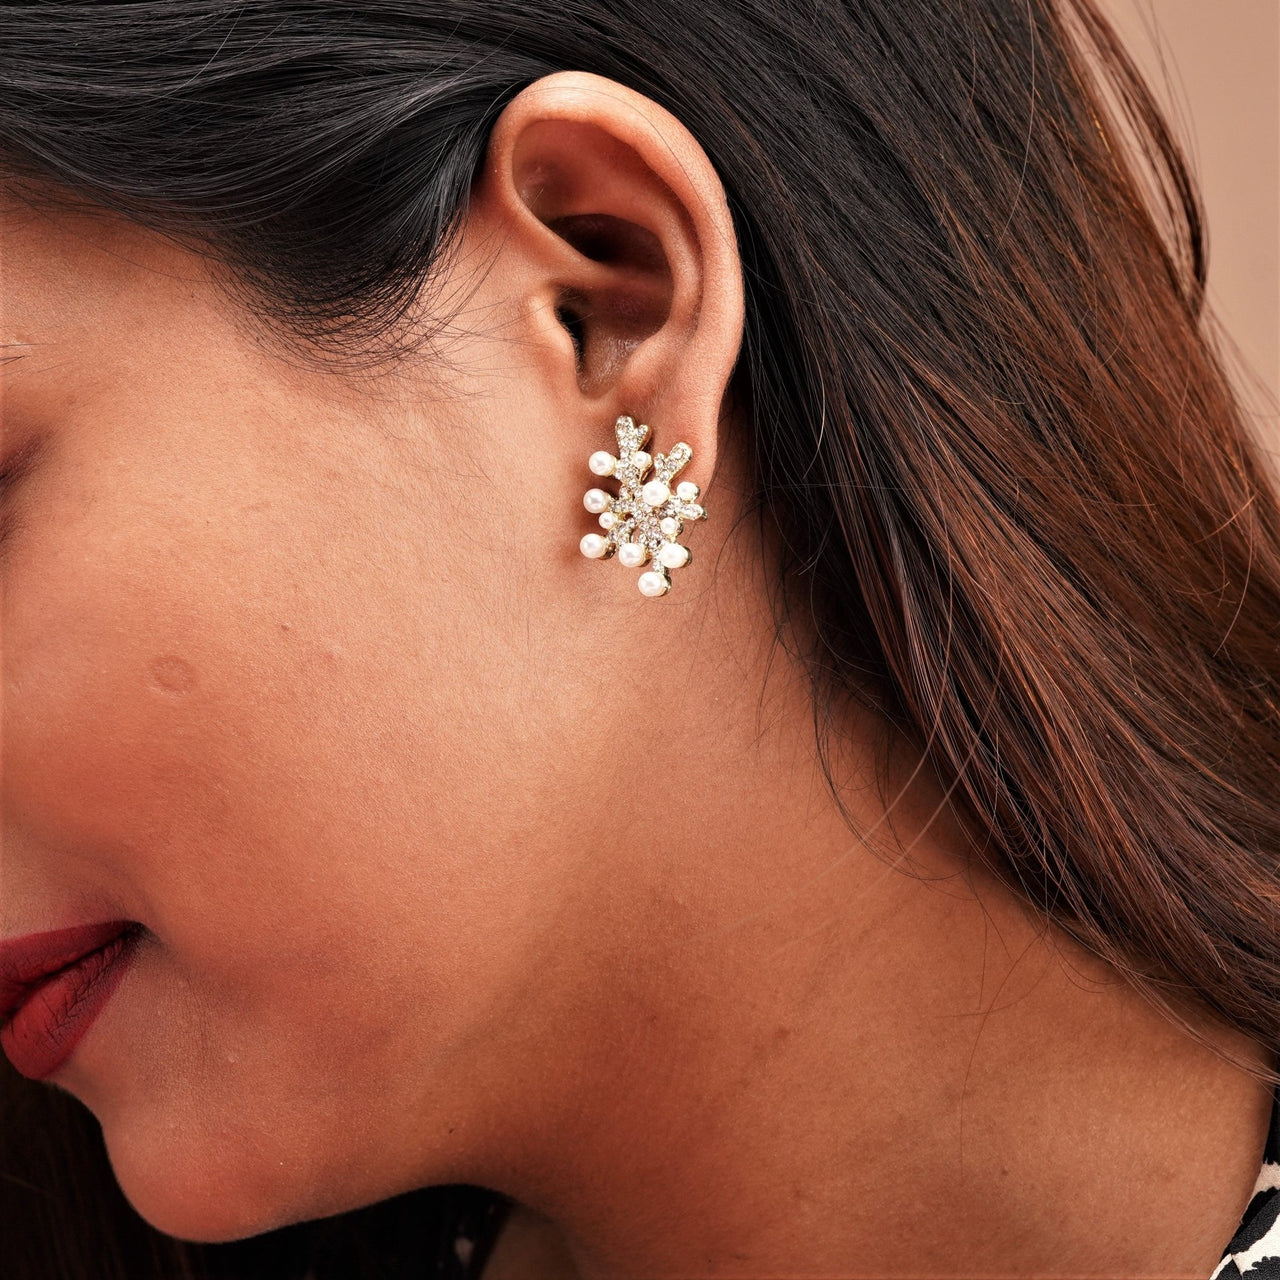 A pearl beaded design earring on a girls ear